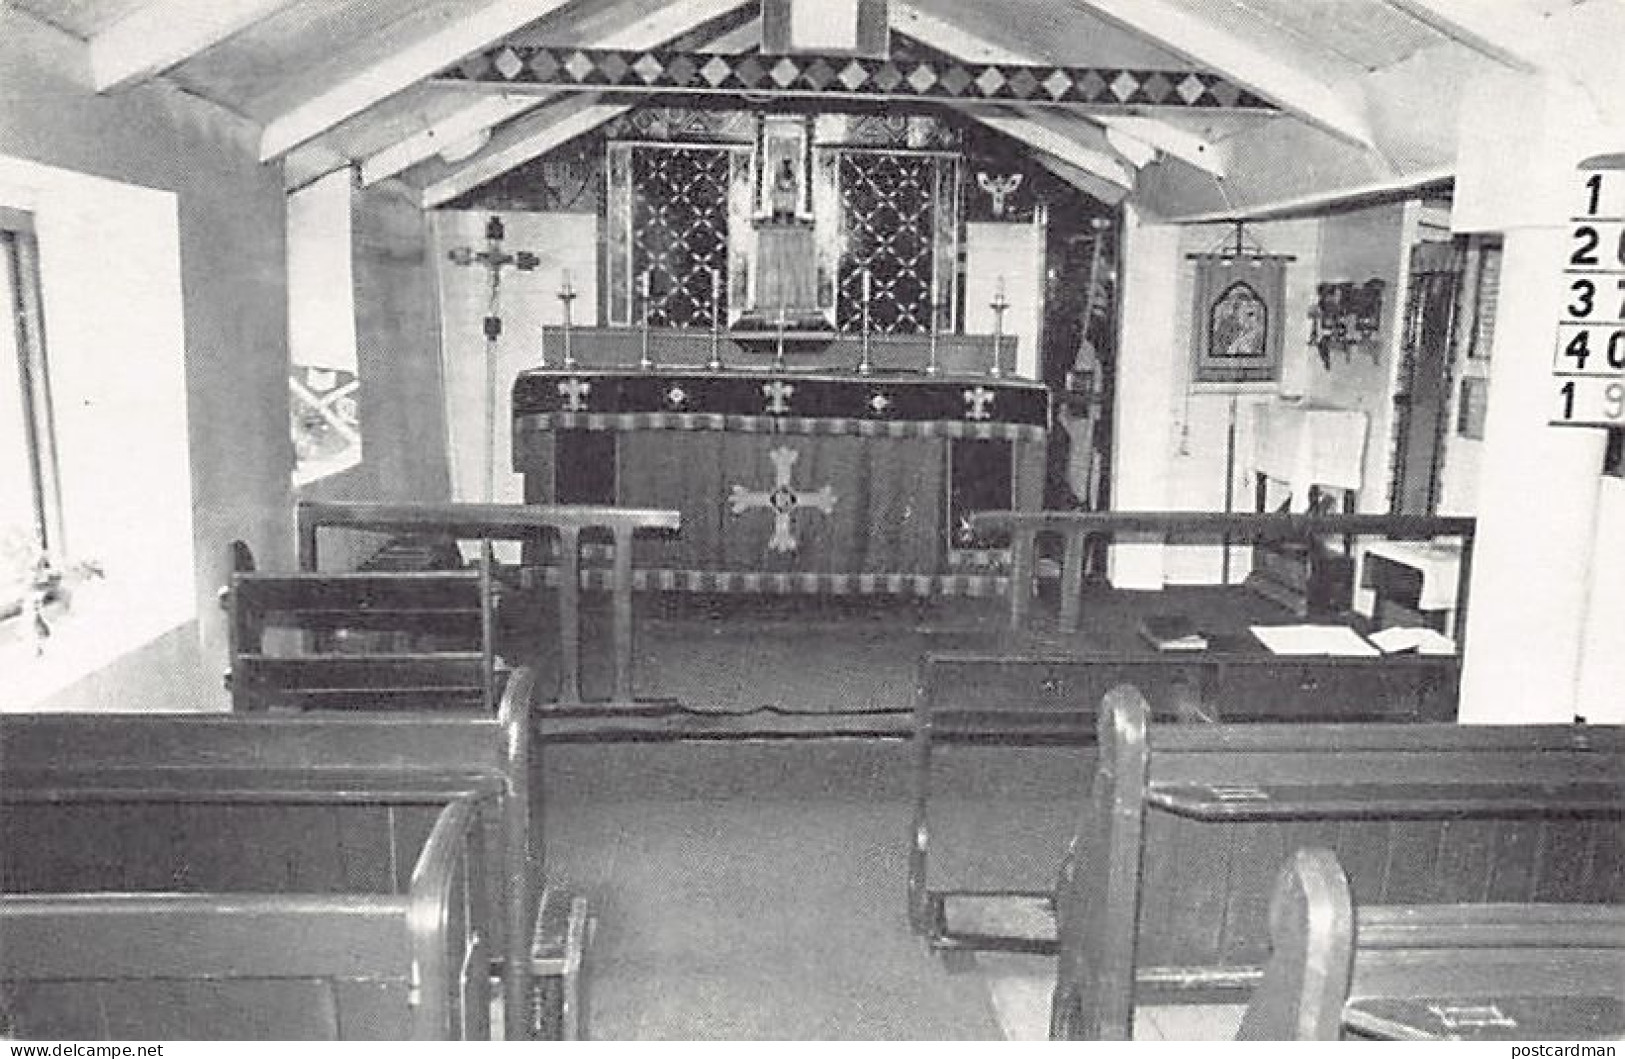 TRISTAN DA CUNHA - Interior From St. Mary's Church - Publ. Roland Svensson (Year 1979)  - Sant'Elena